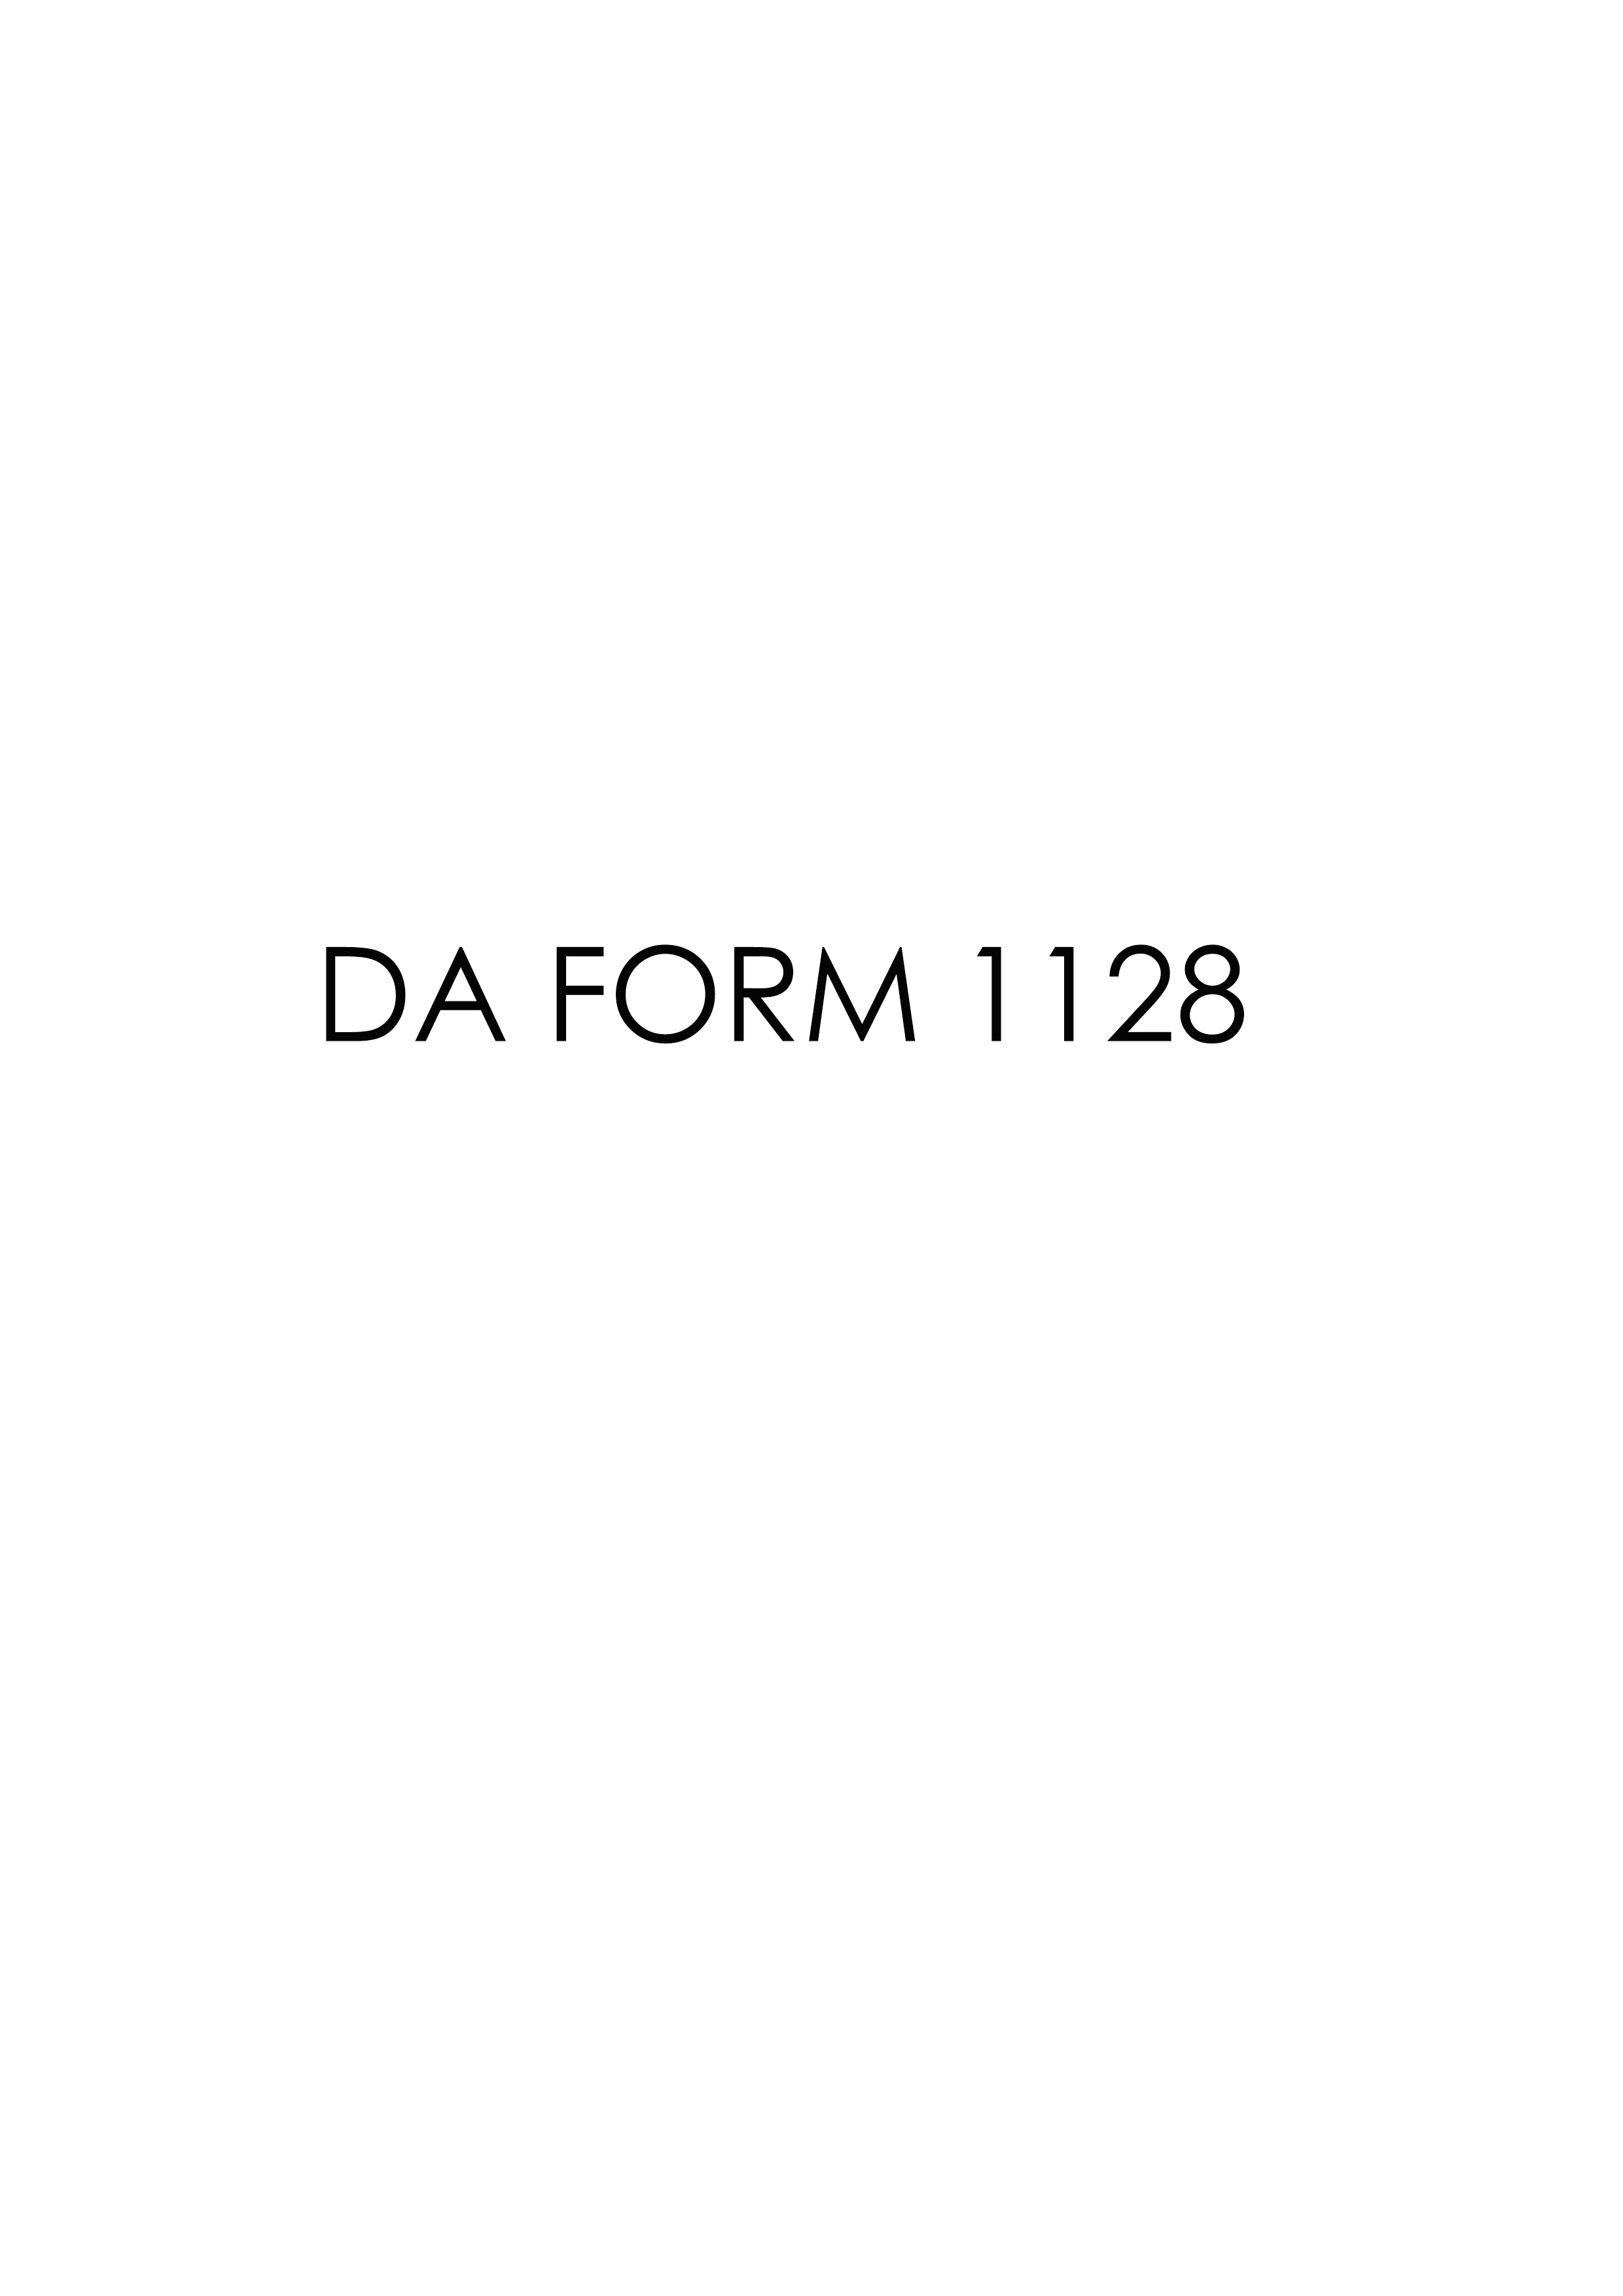 Download da 1128 Form Free